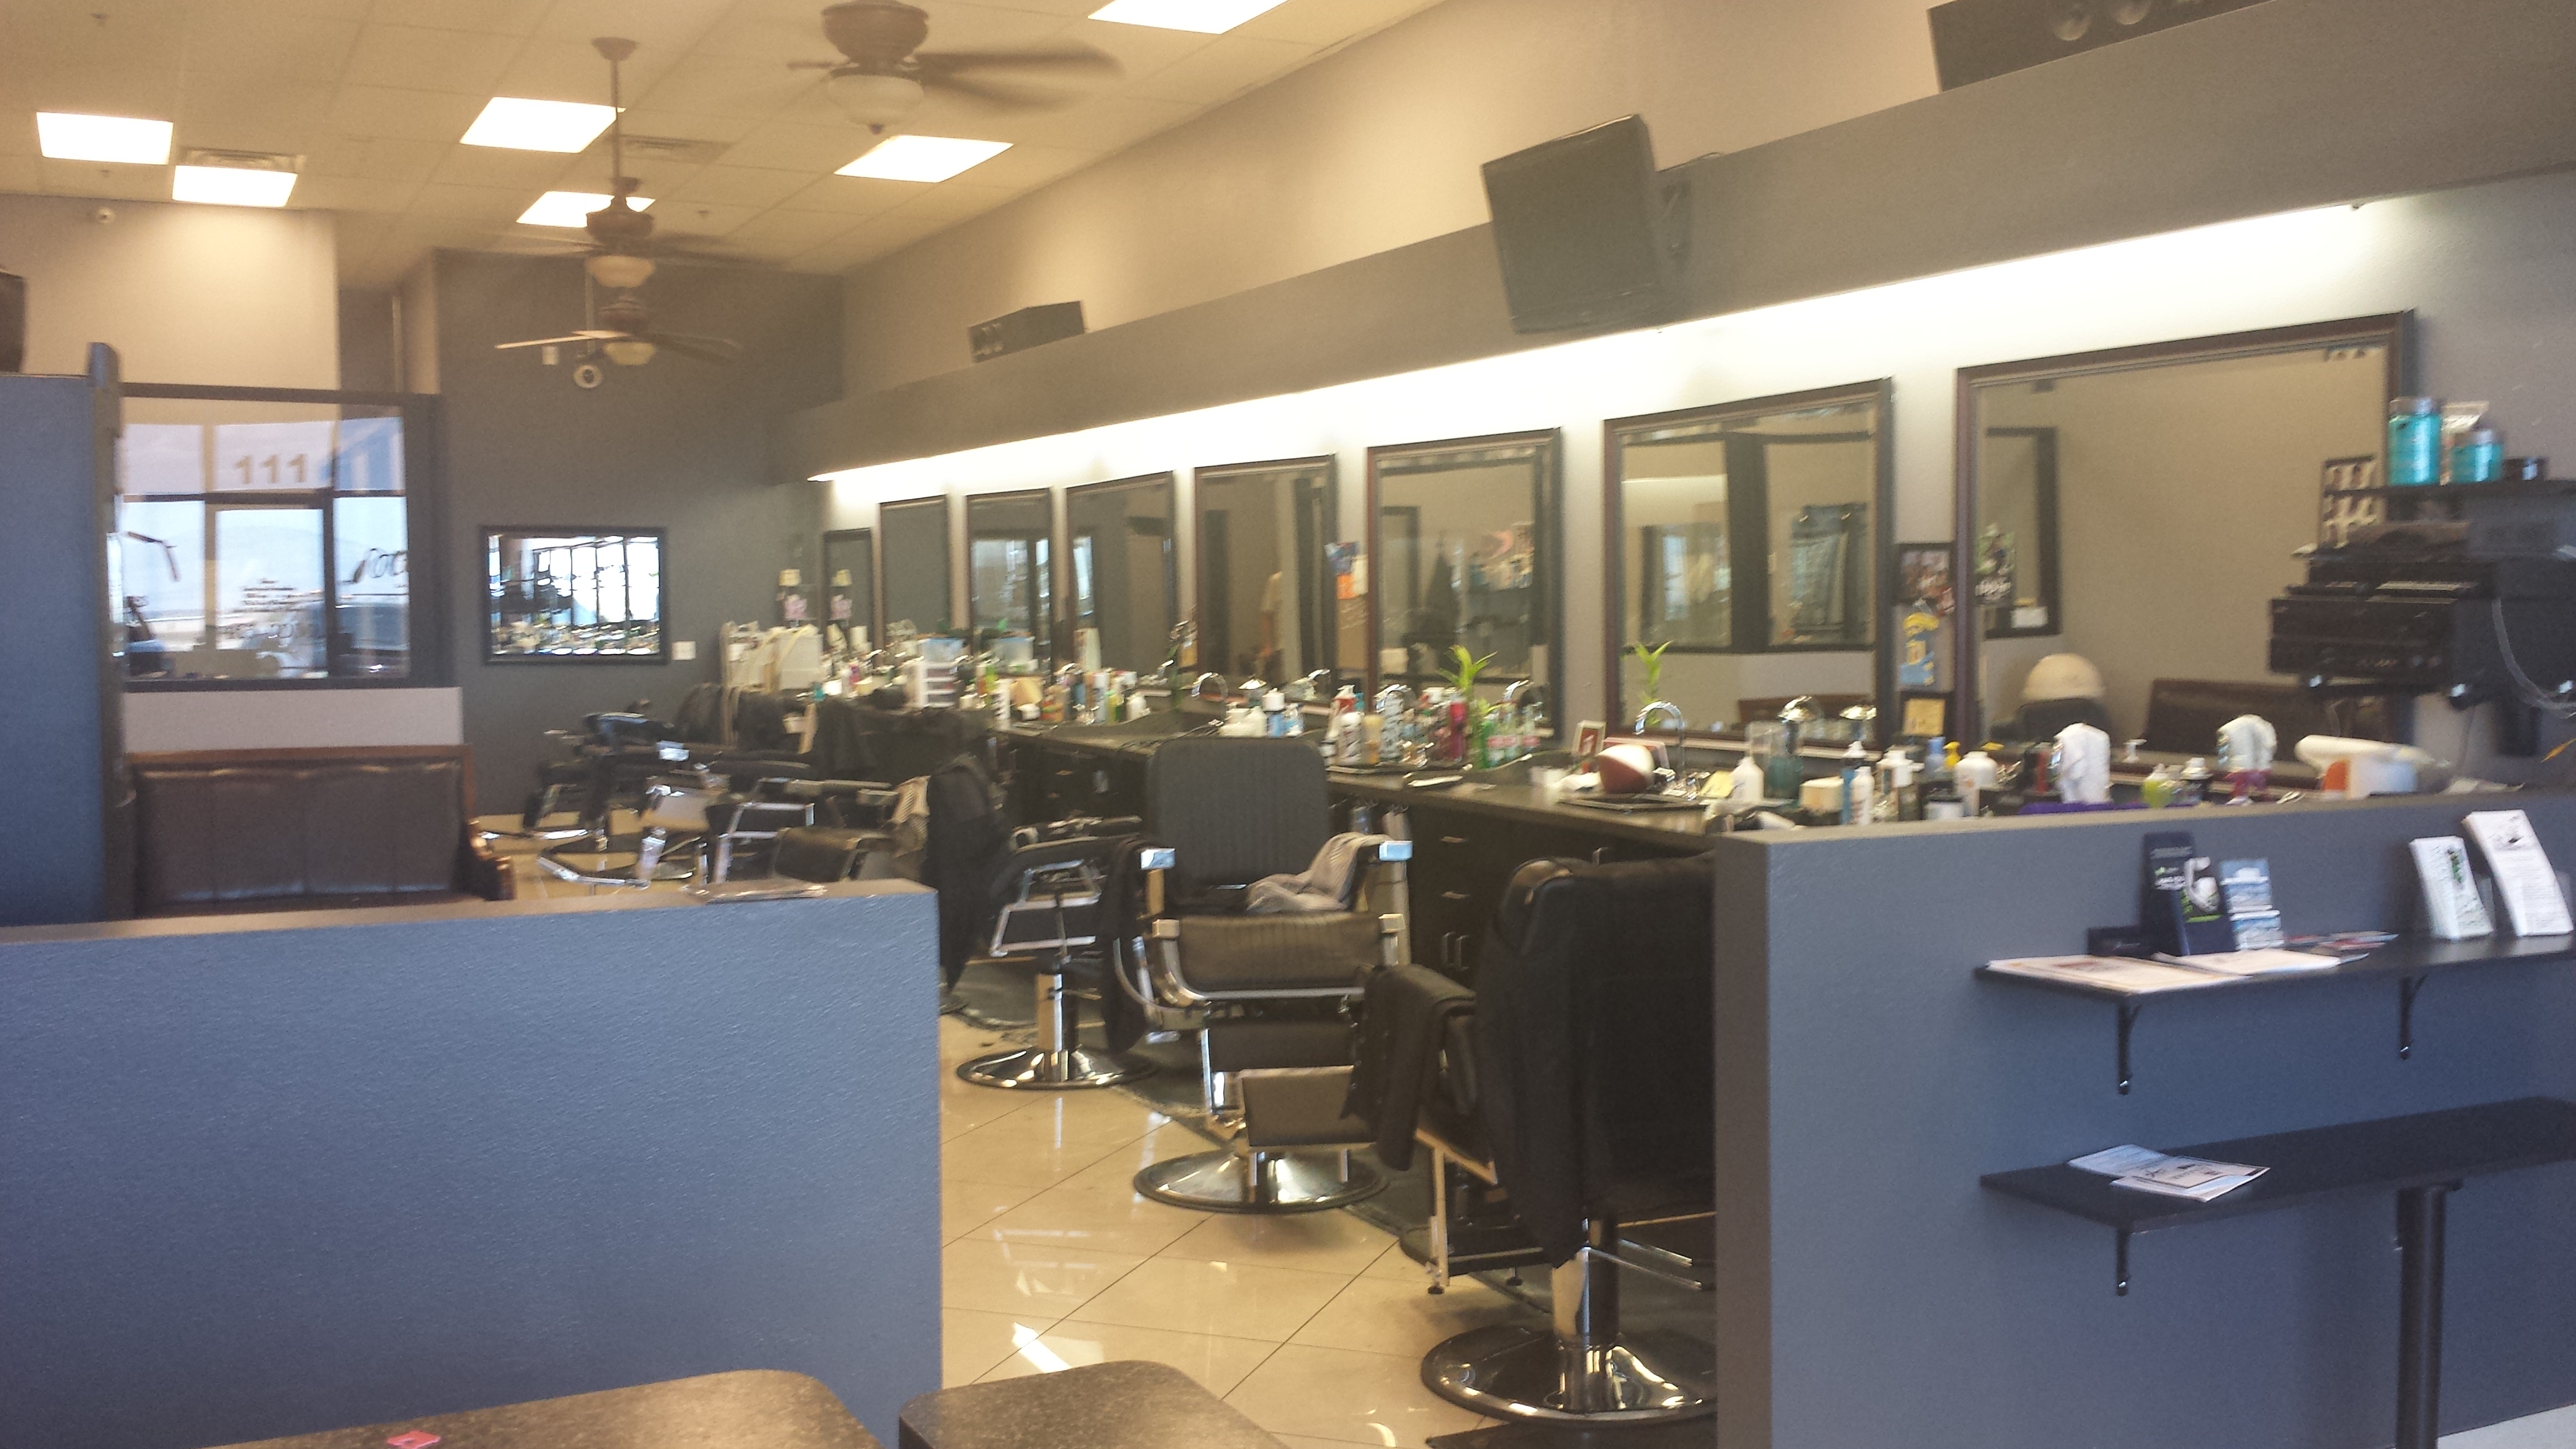 Barber Shop Las Vegas 89130